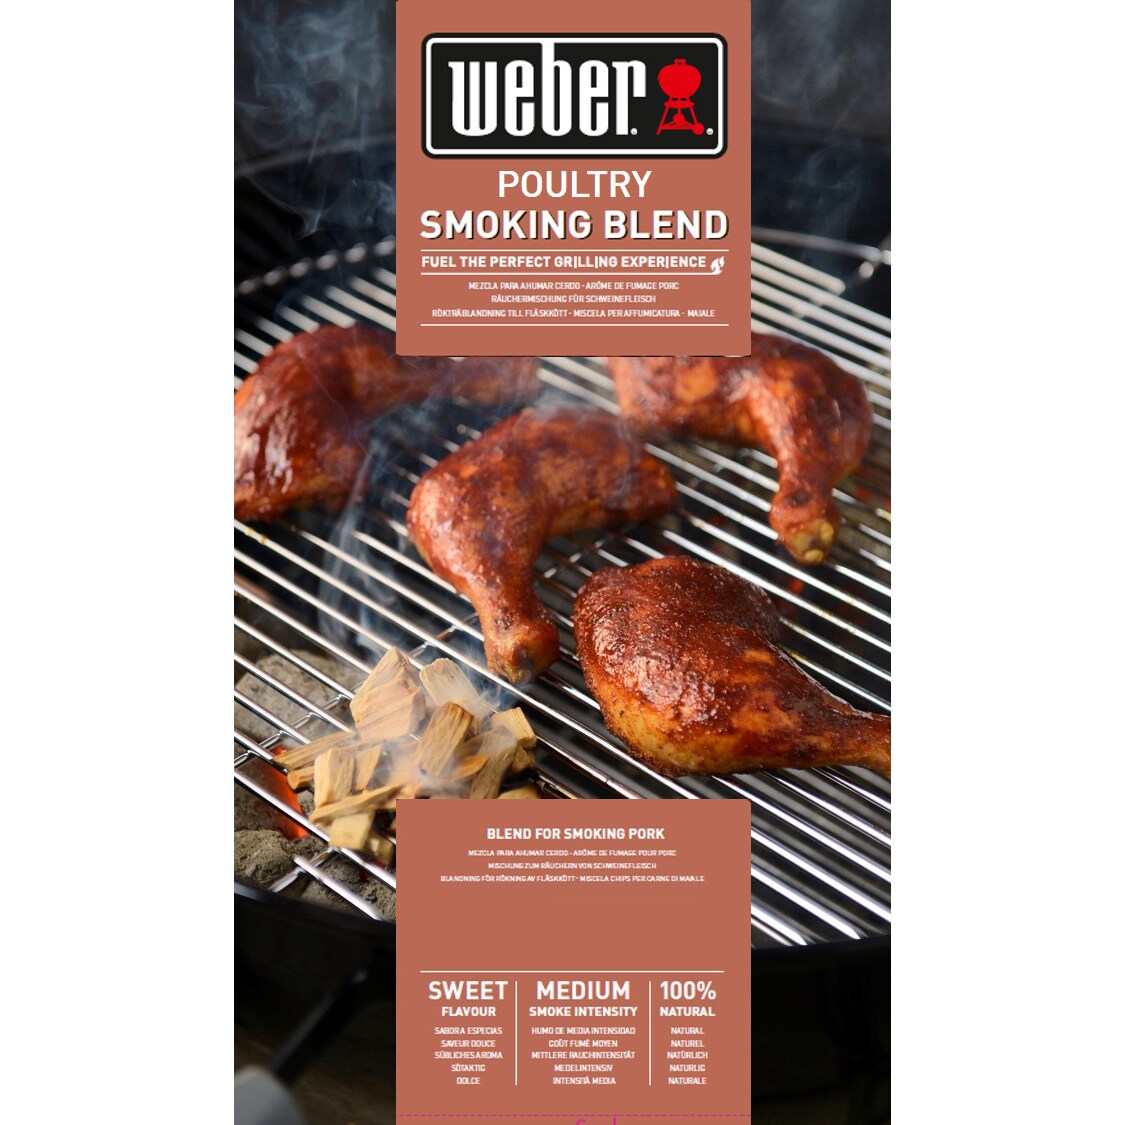 Weber Smoking Poultry Blend træflis 17833 thumbnail